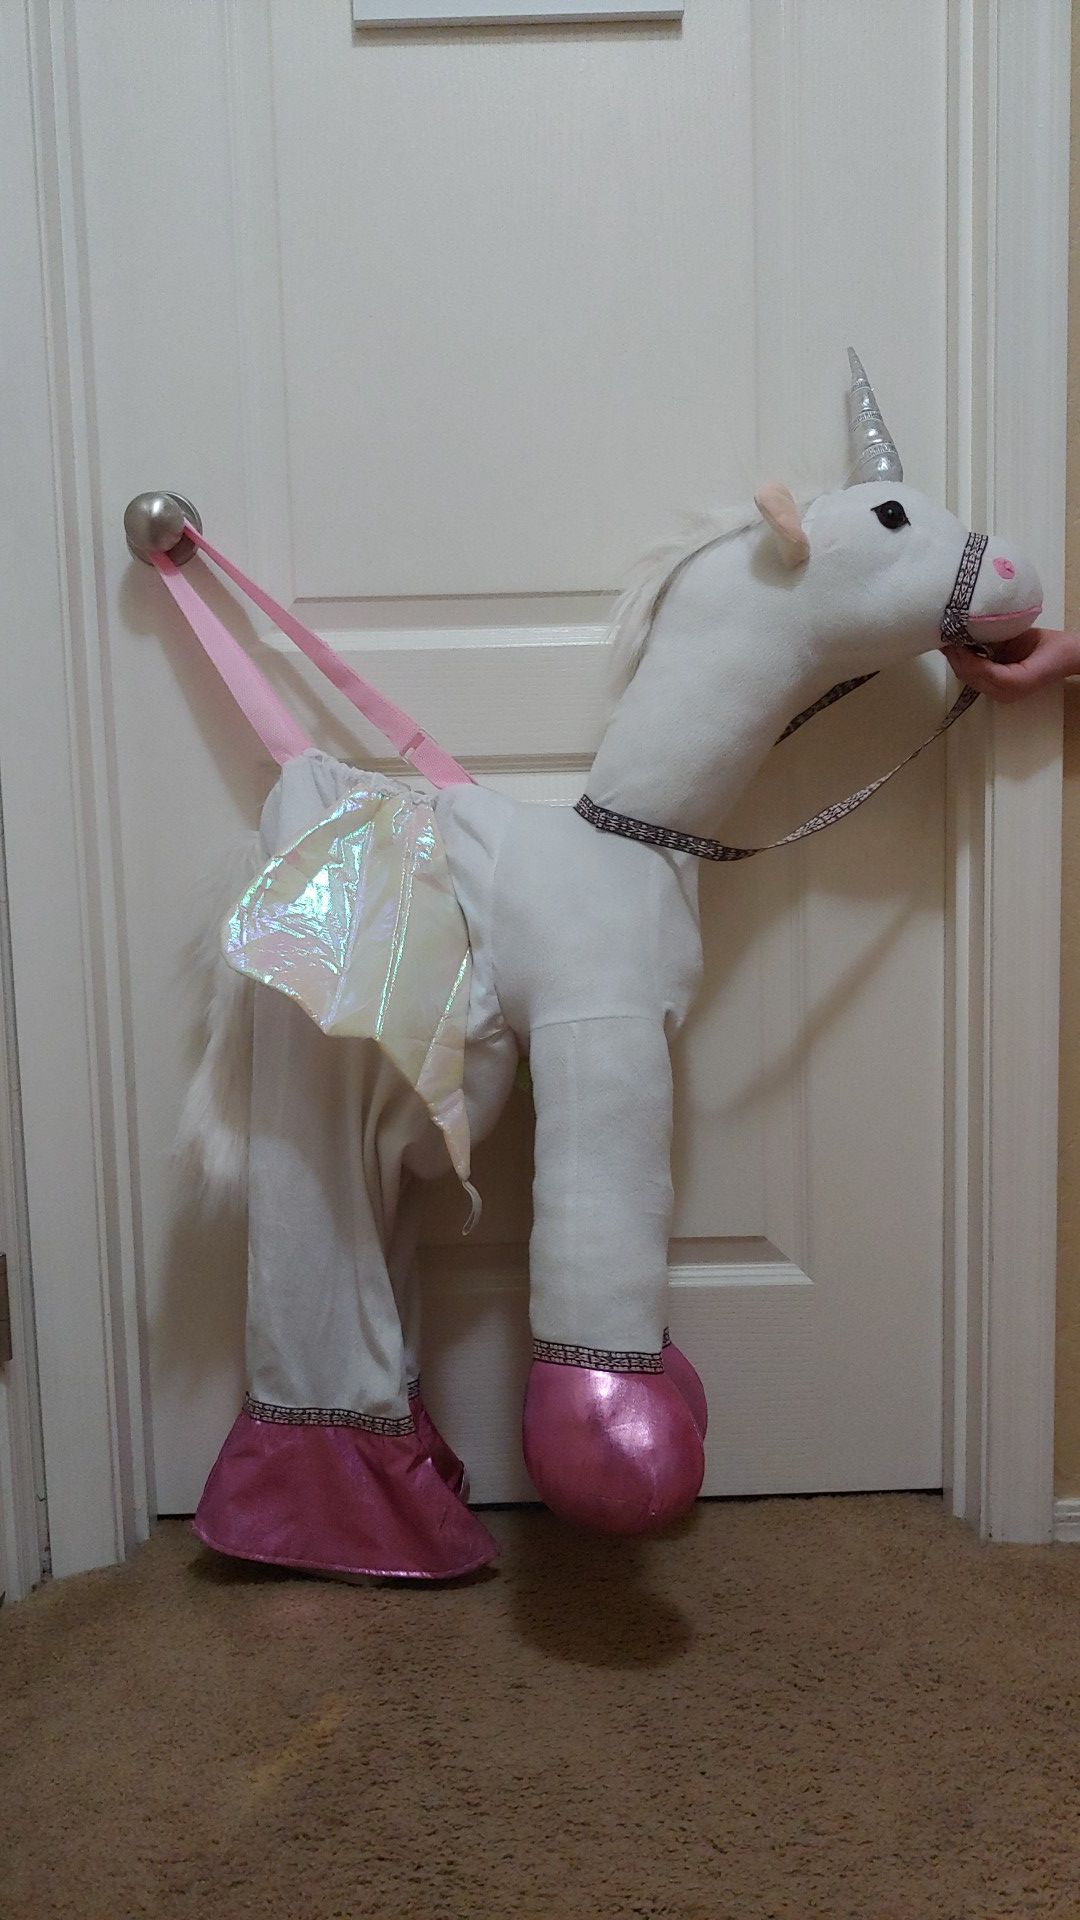 Unicorn Costume